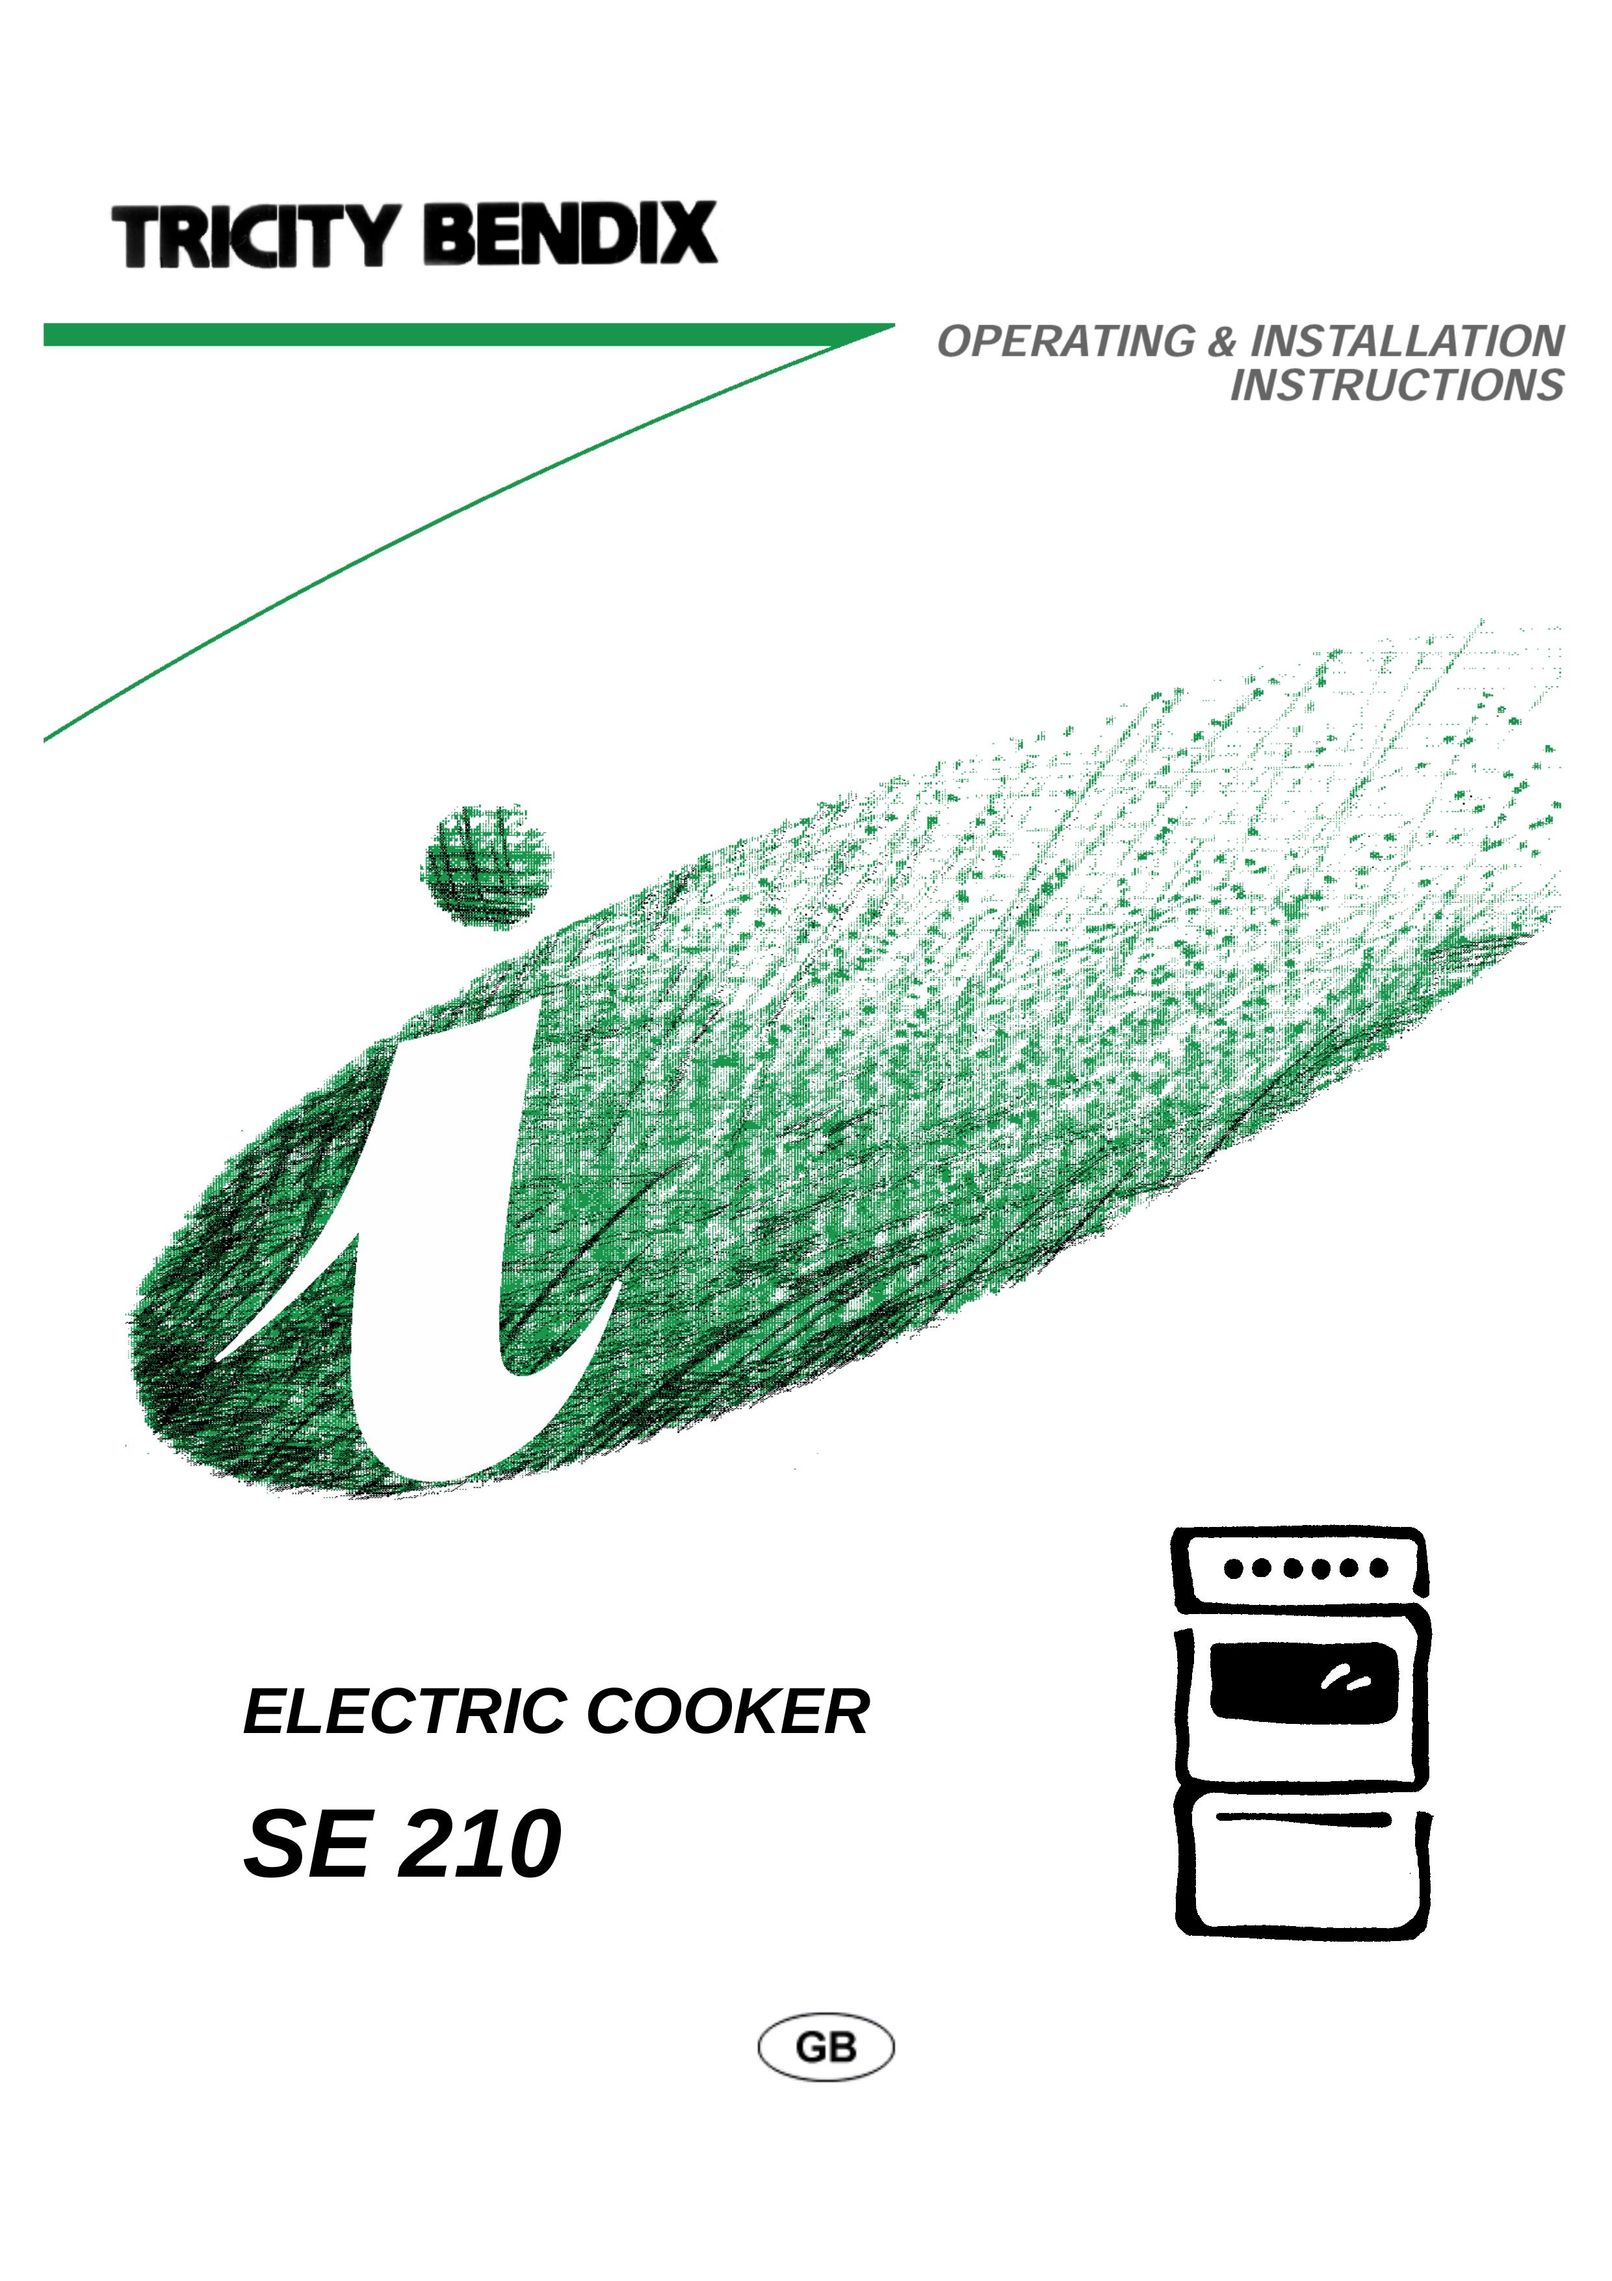 Tricity Bendix SE 210 Cooktop User Manual